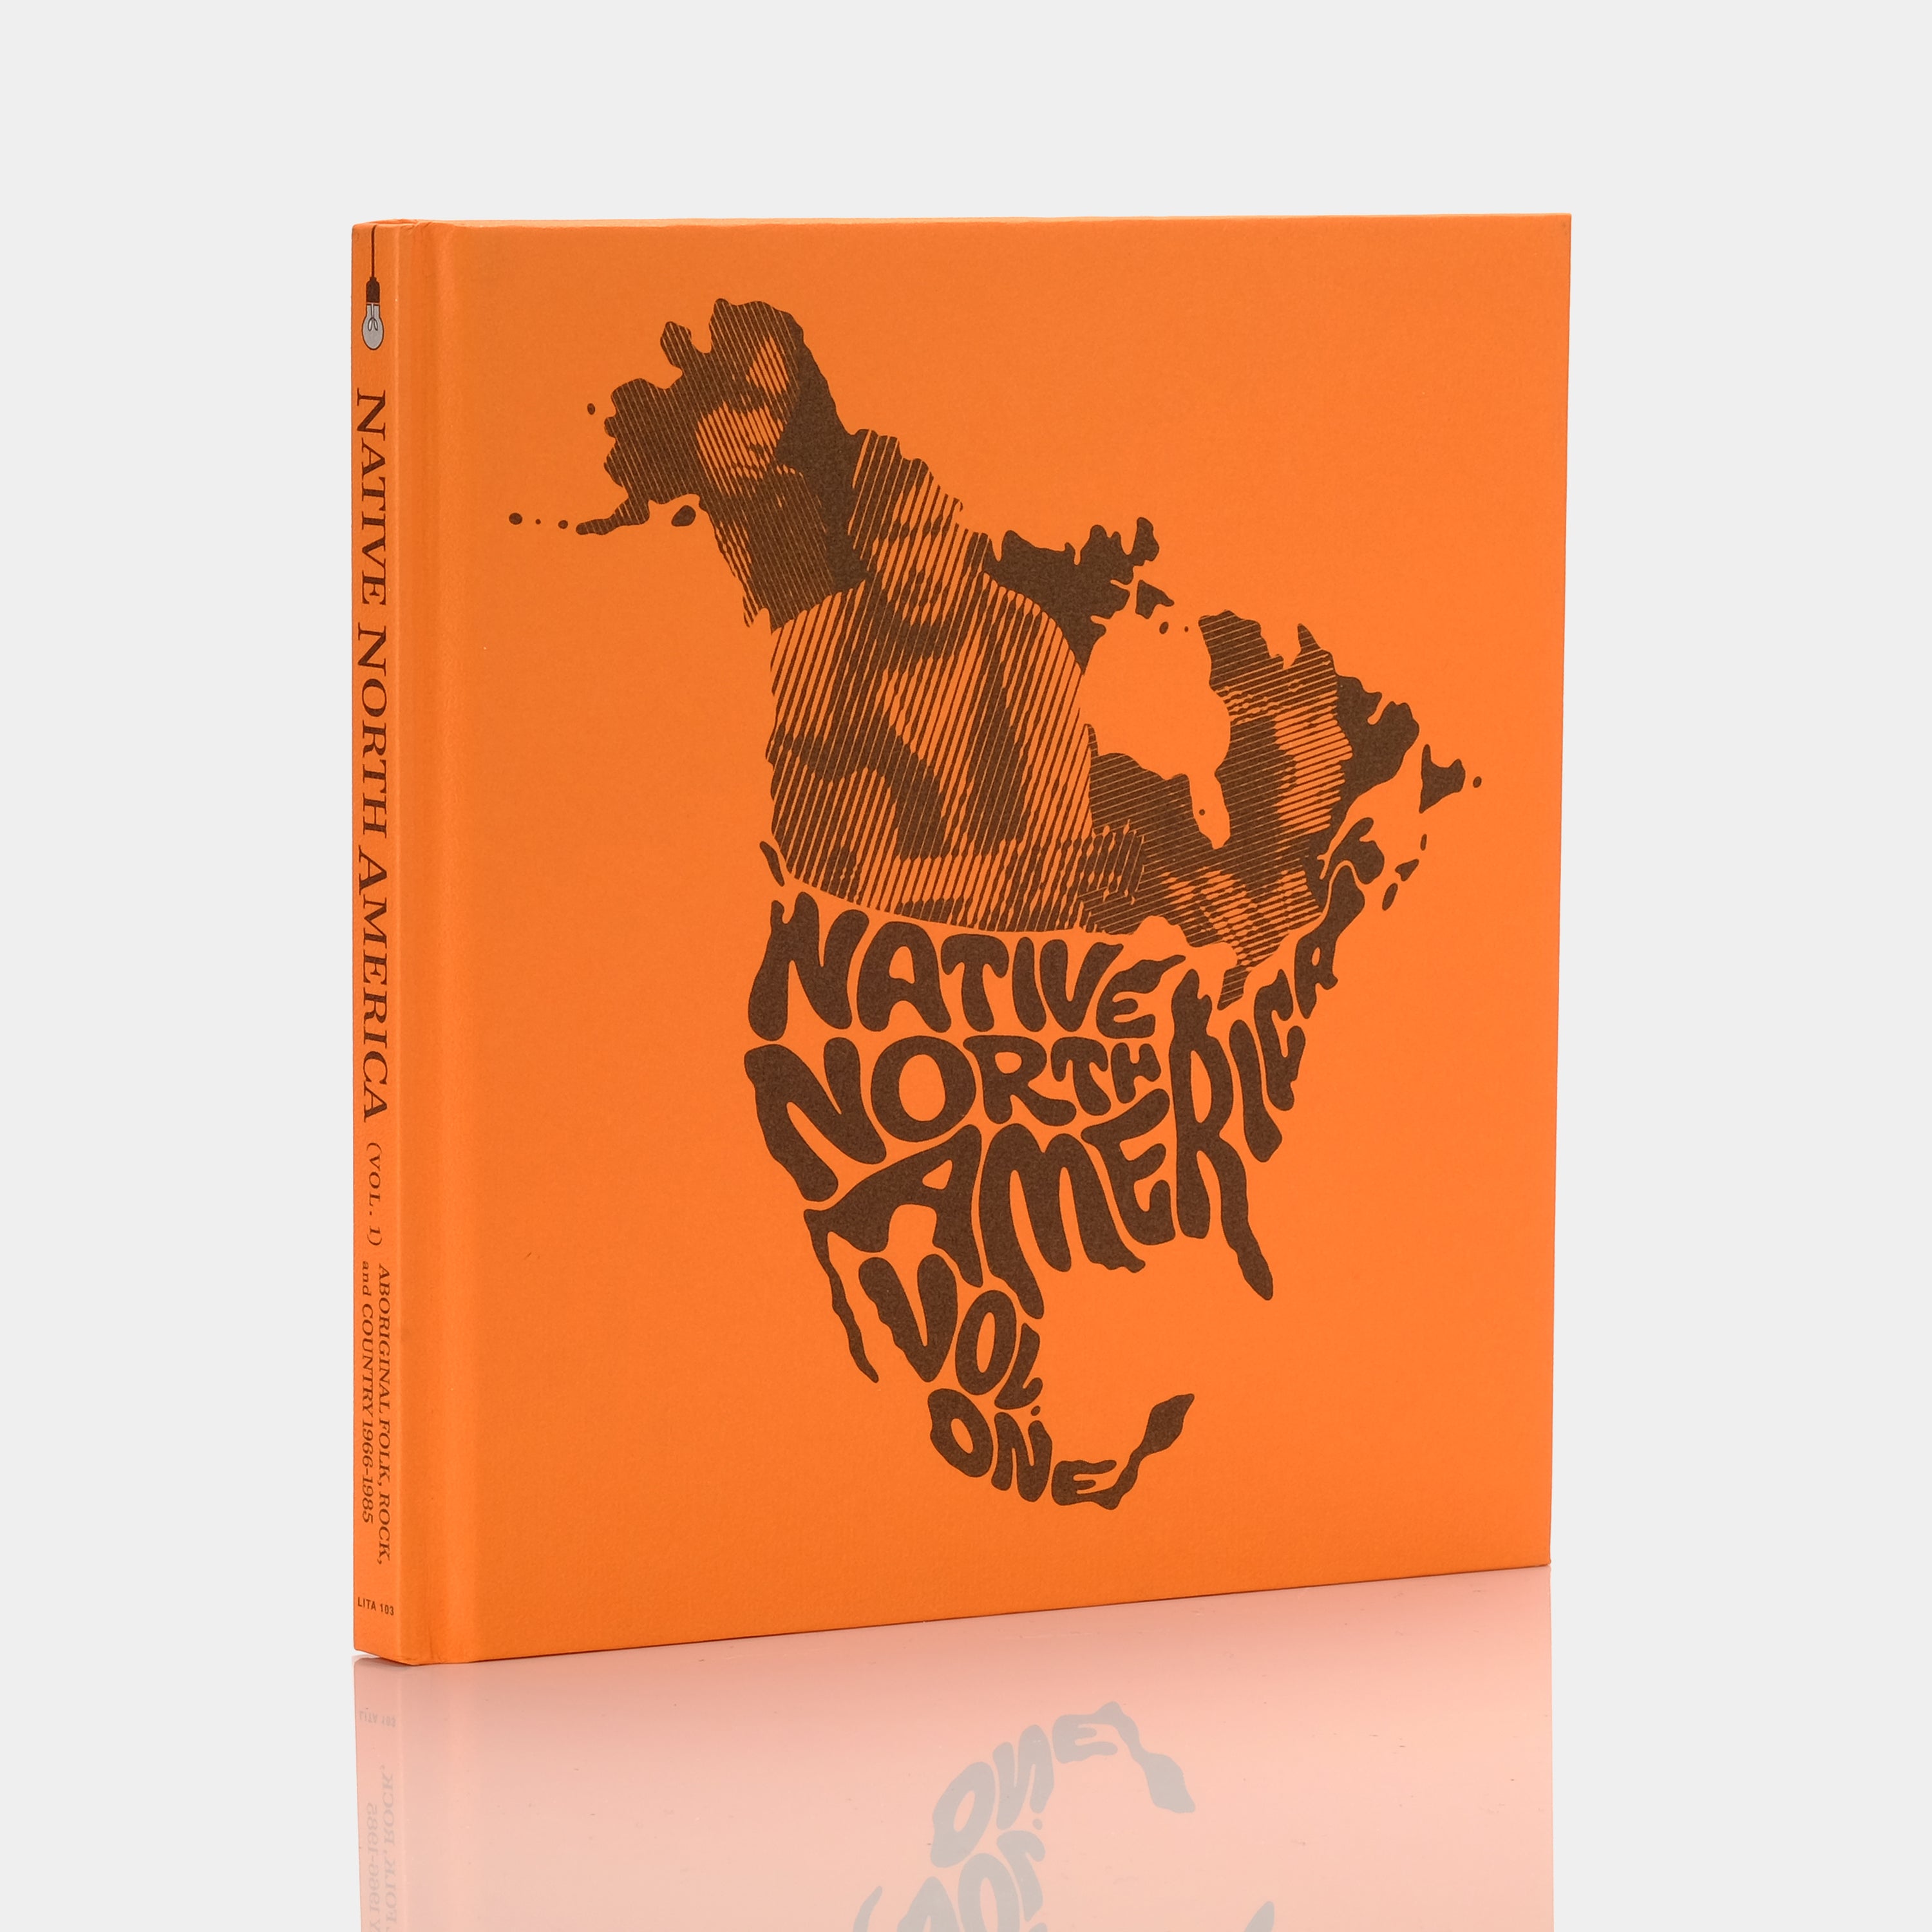 Native North America (Vol. 1): Aboriginal Folk, Rock And Country 1966-1985 2xCD